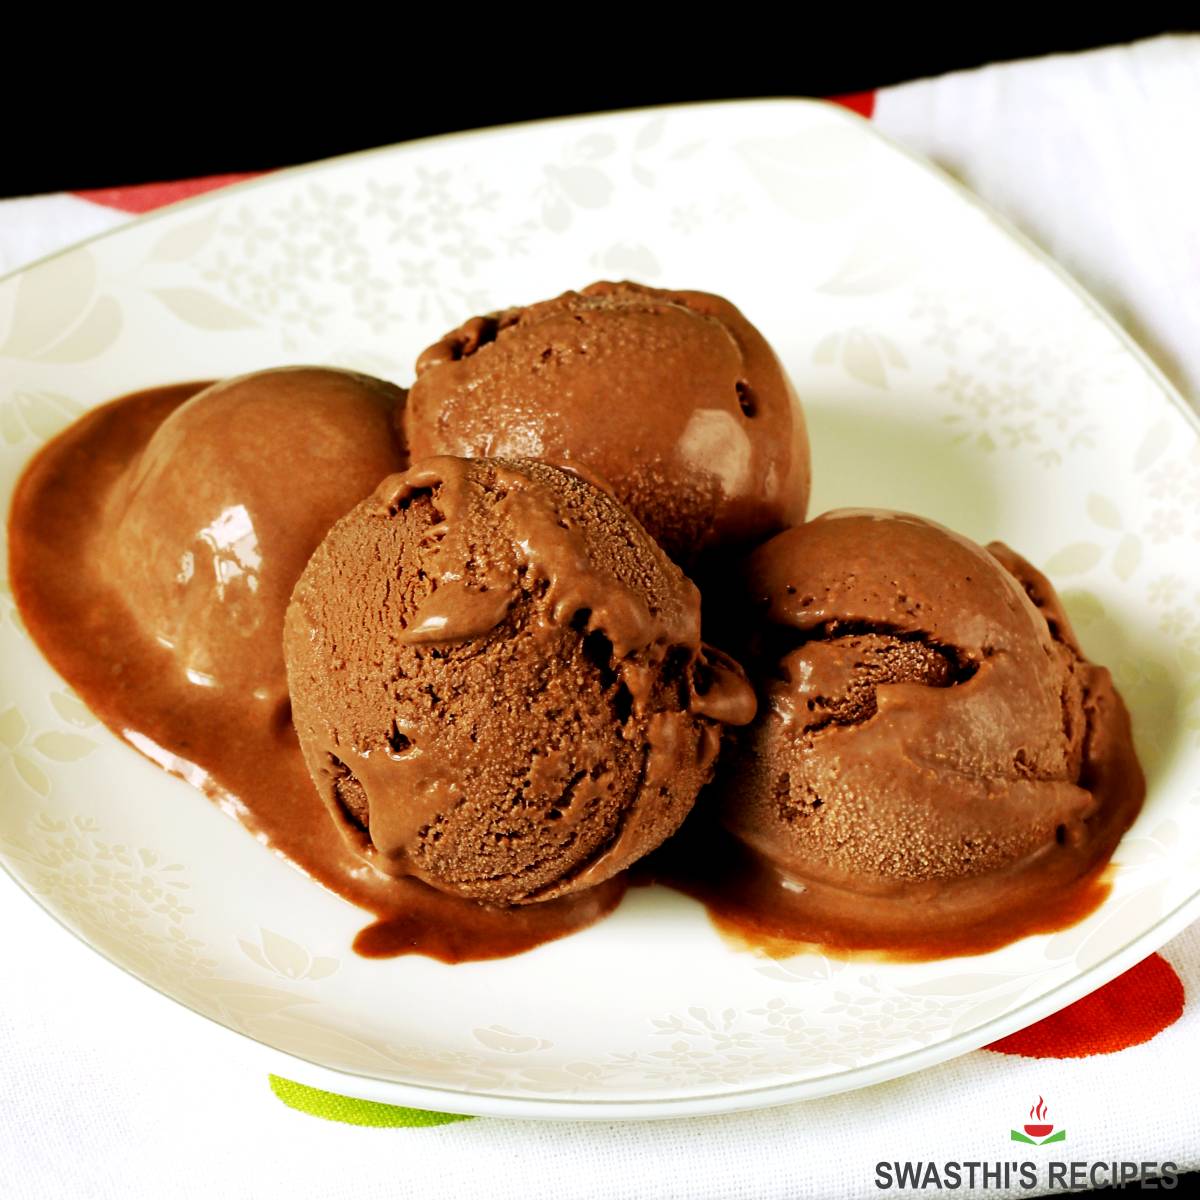 chocolate ice cream photos